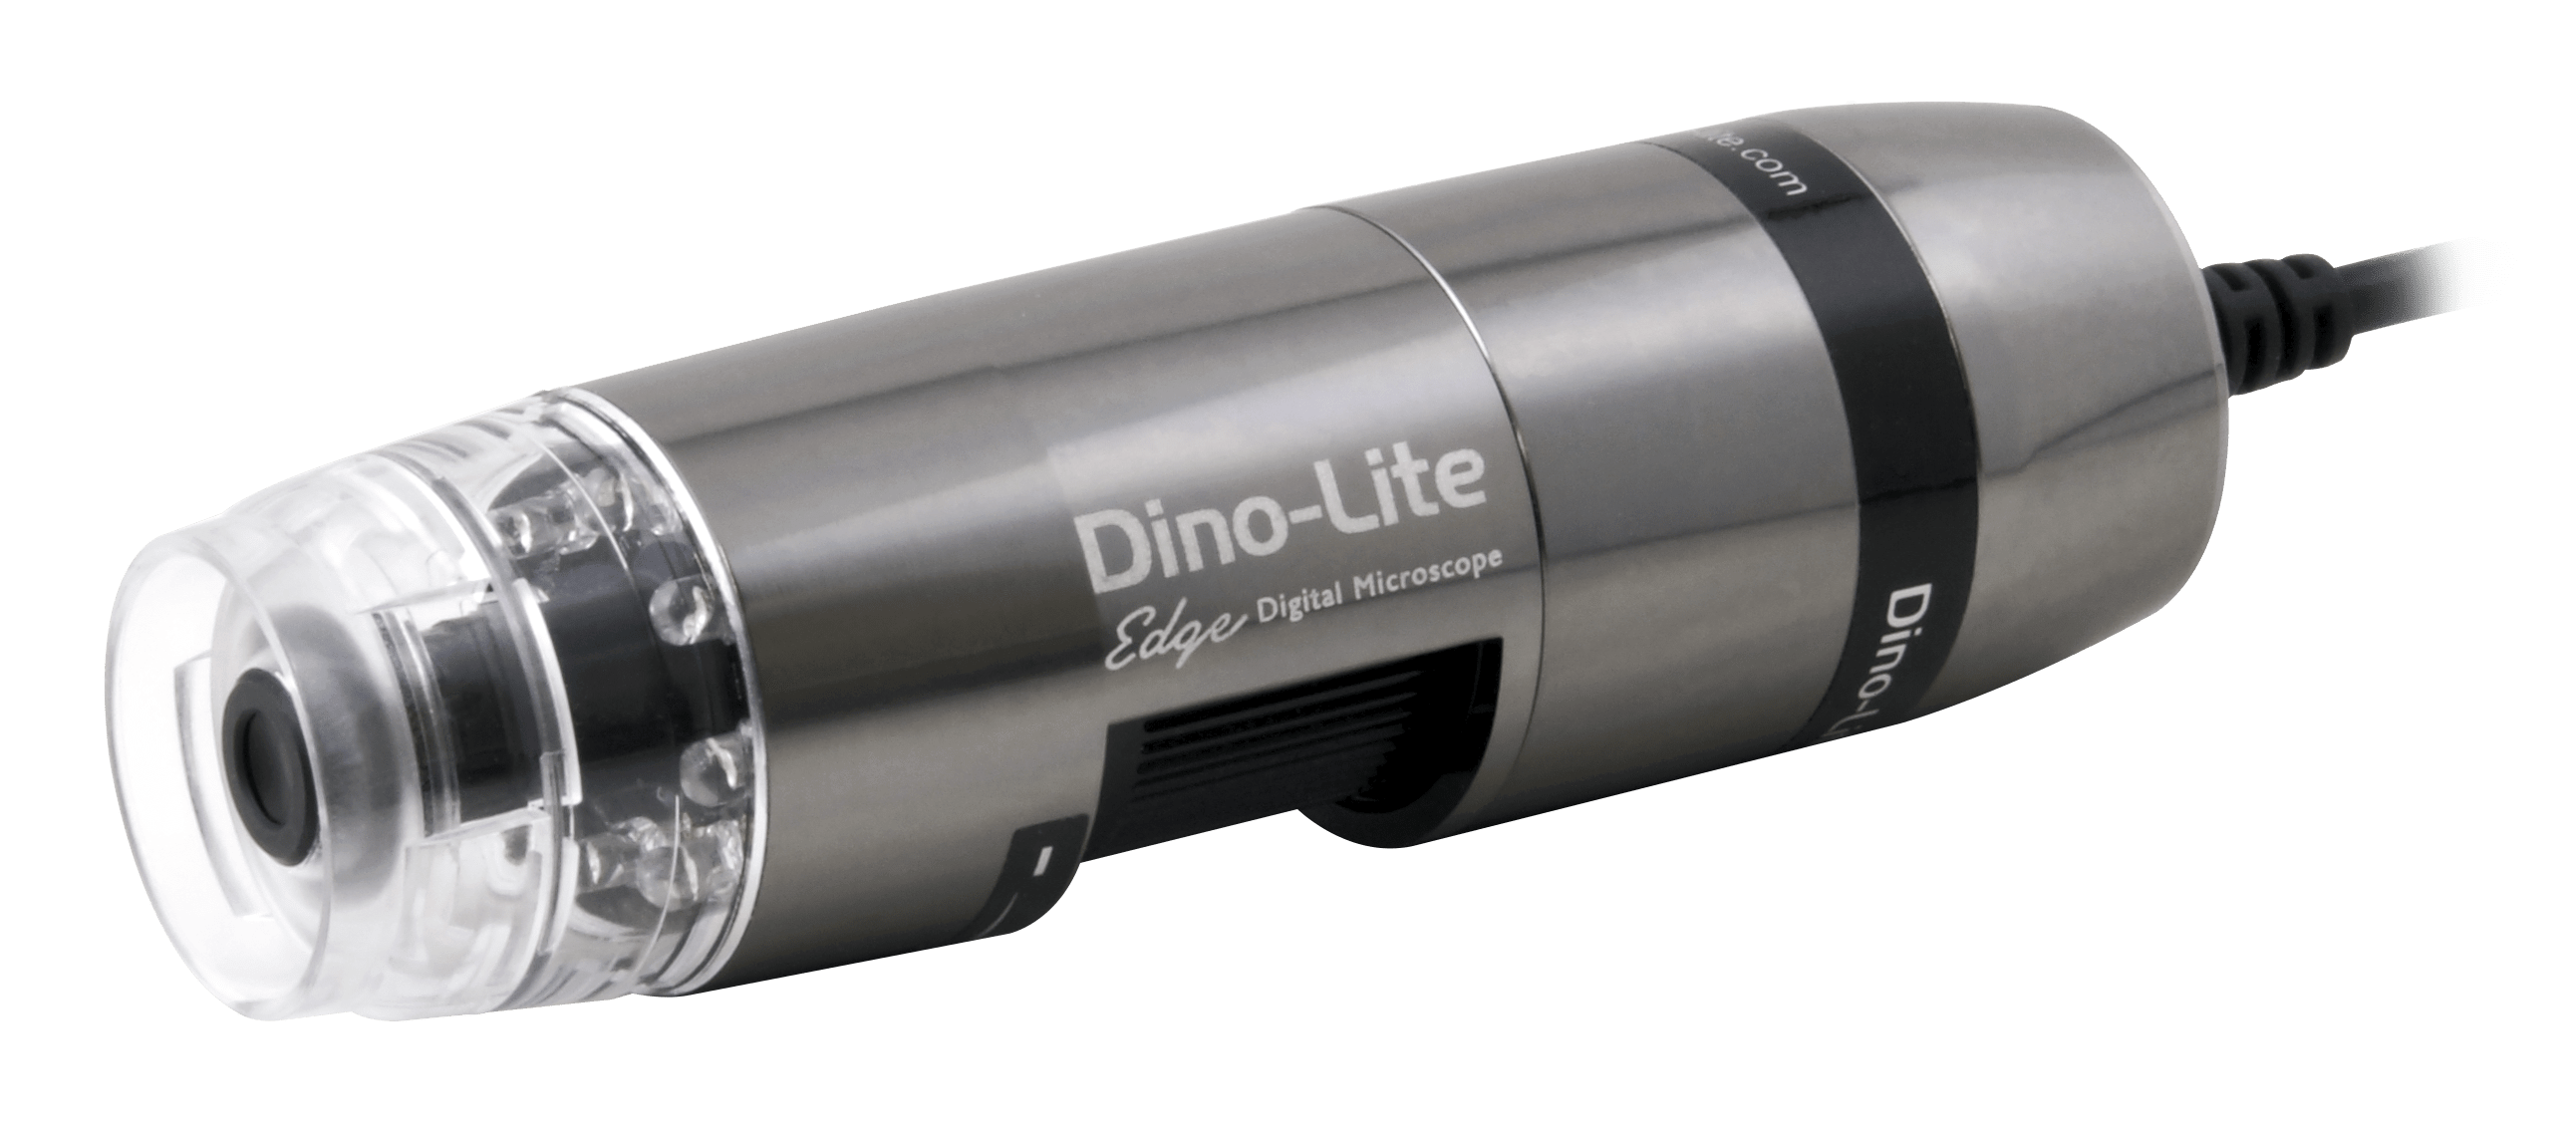 Dino-Lite Edge AM7515MT8A Digital Microscope